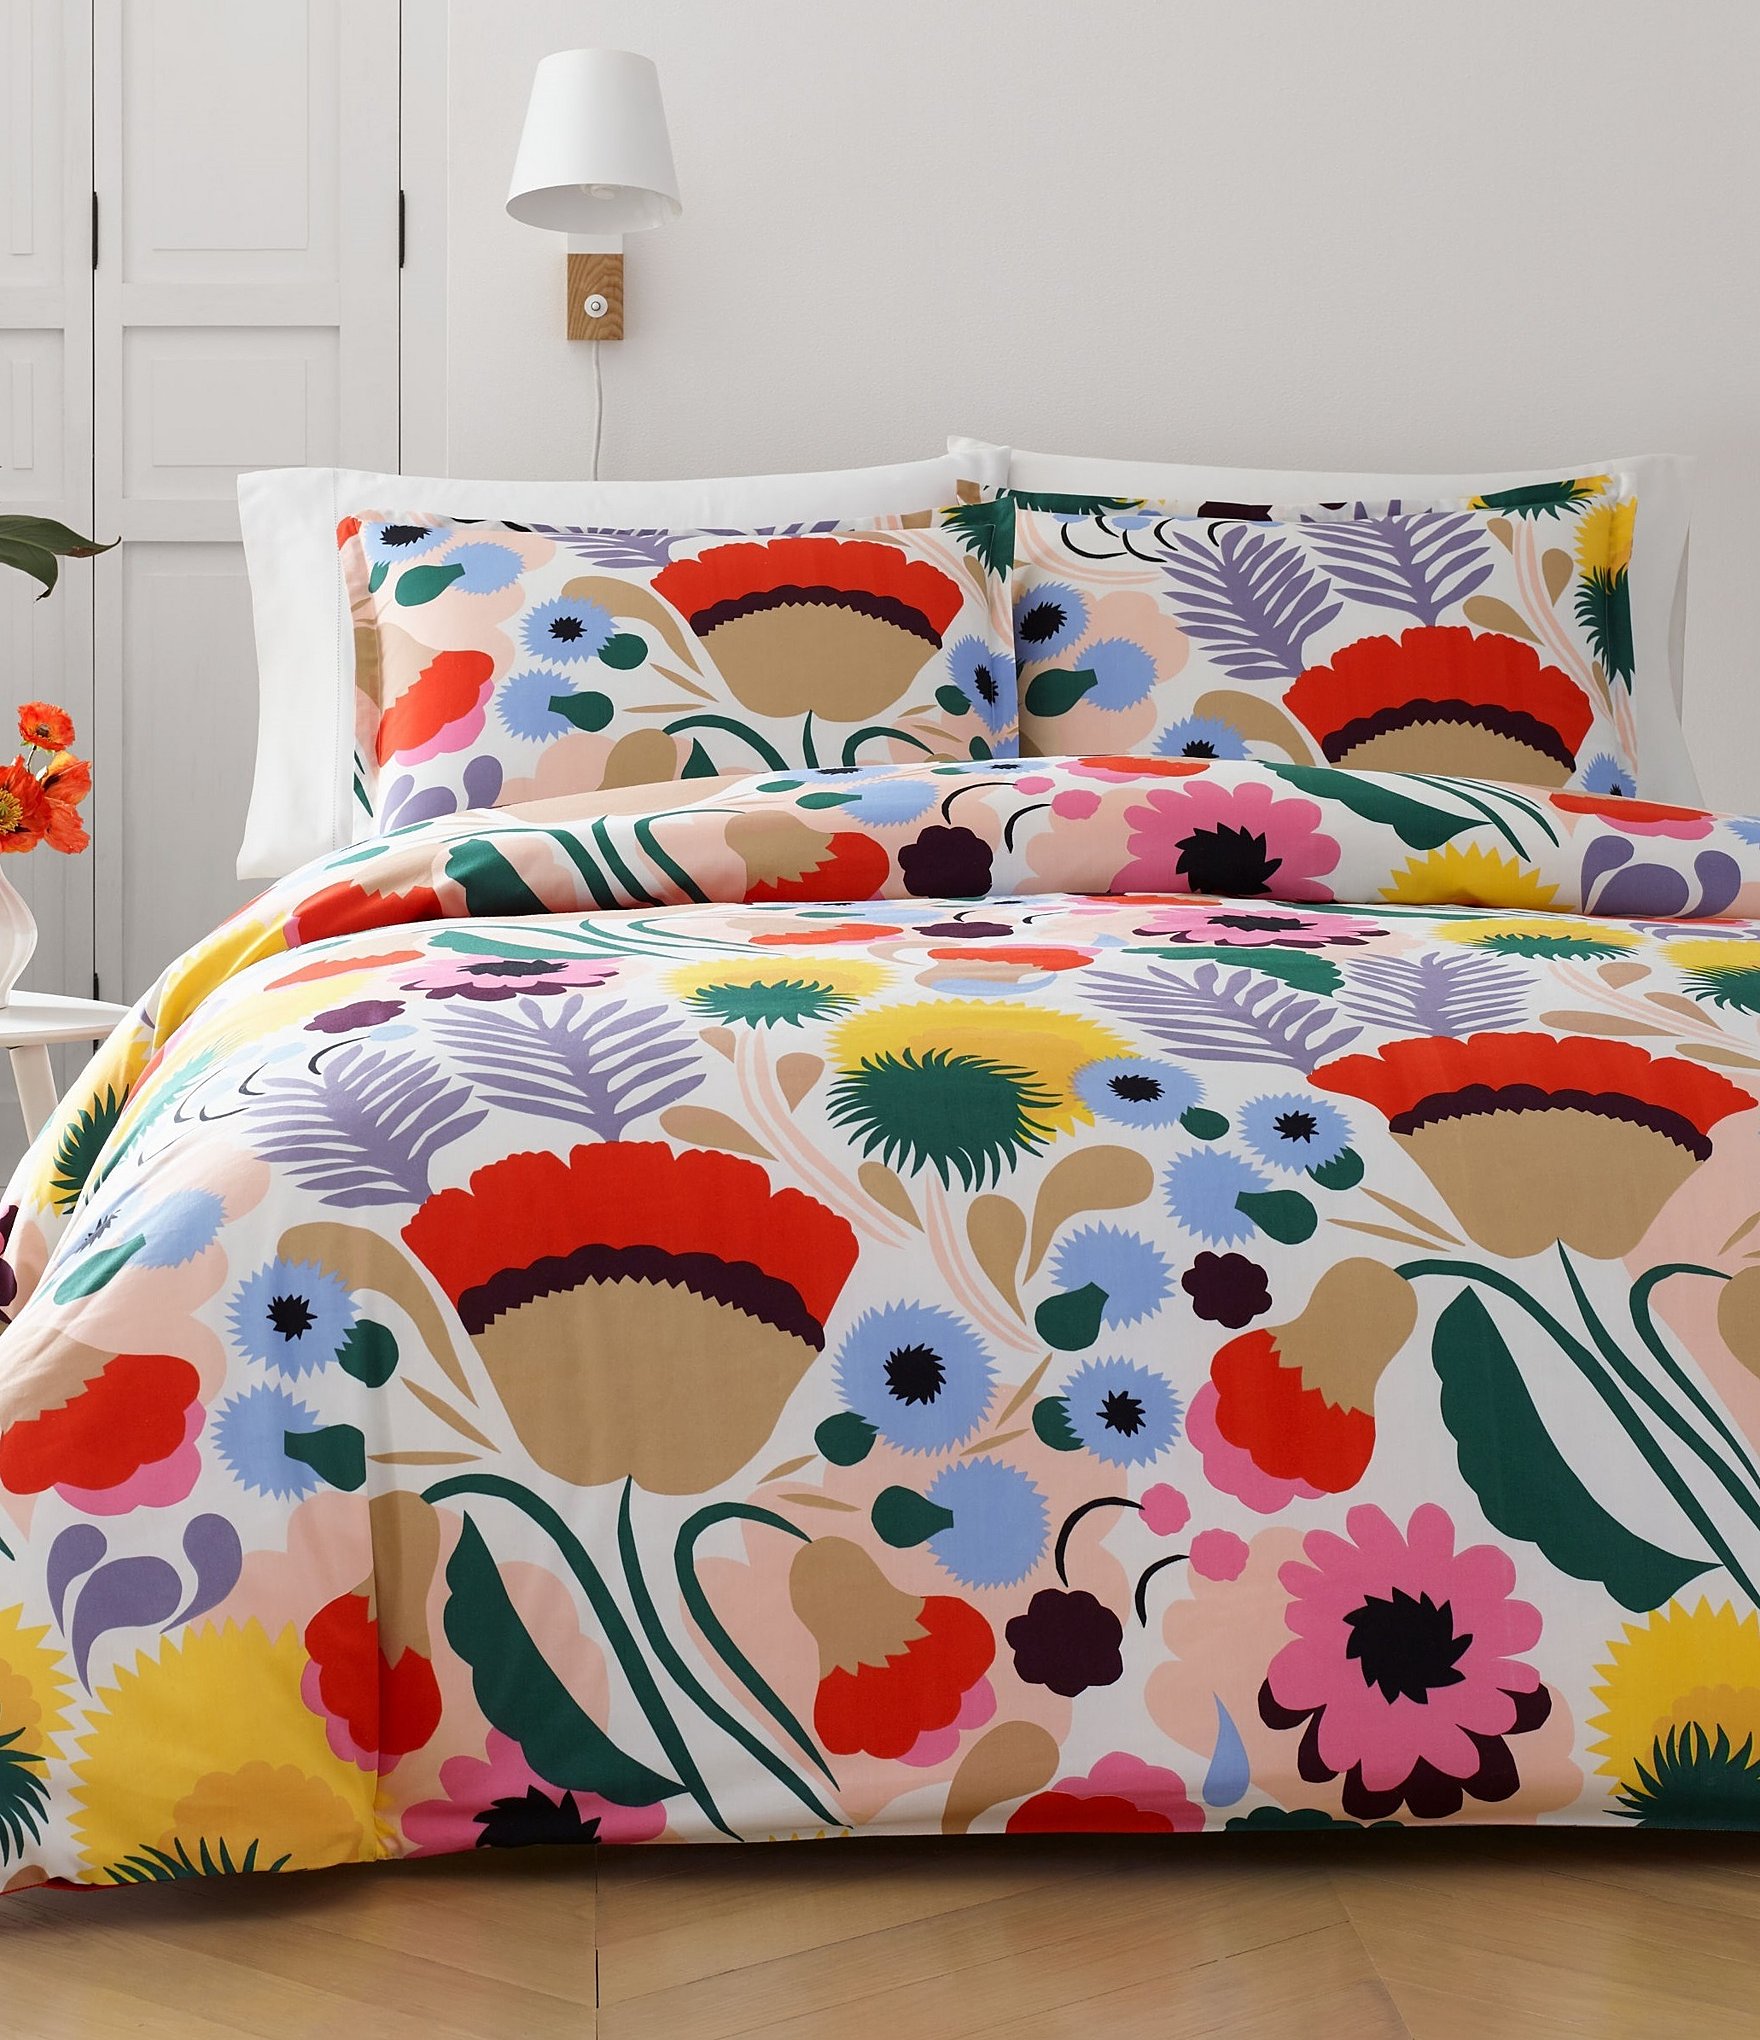 Marimekko Ojakellukka Floral Print Comforter Set | Dillard's